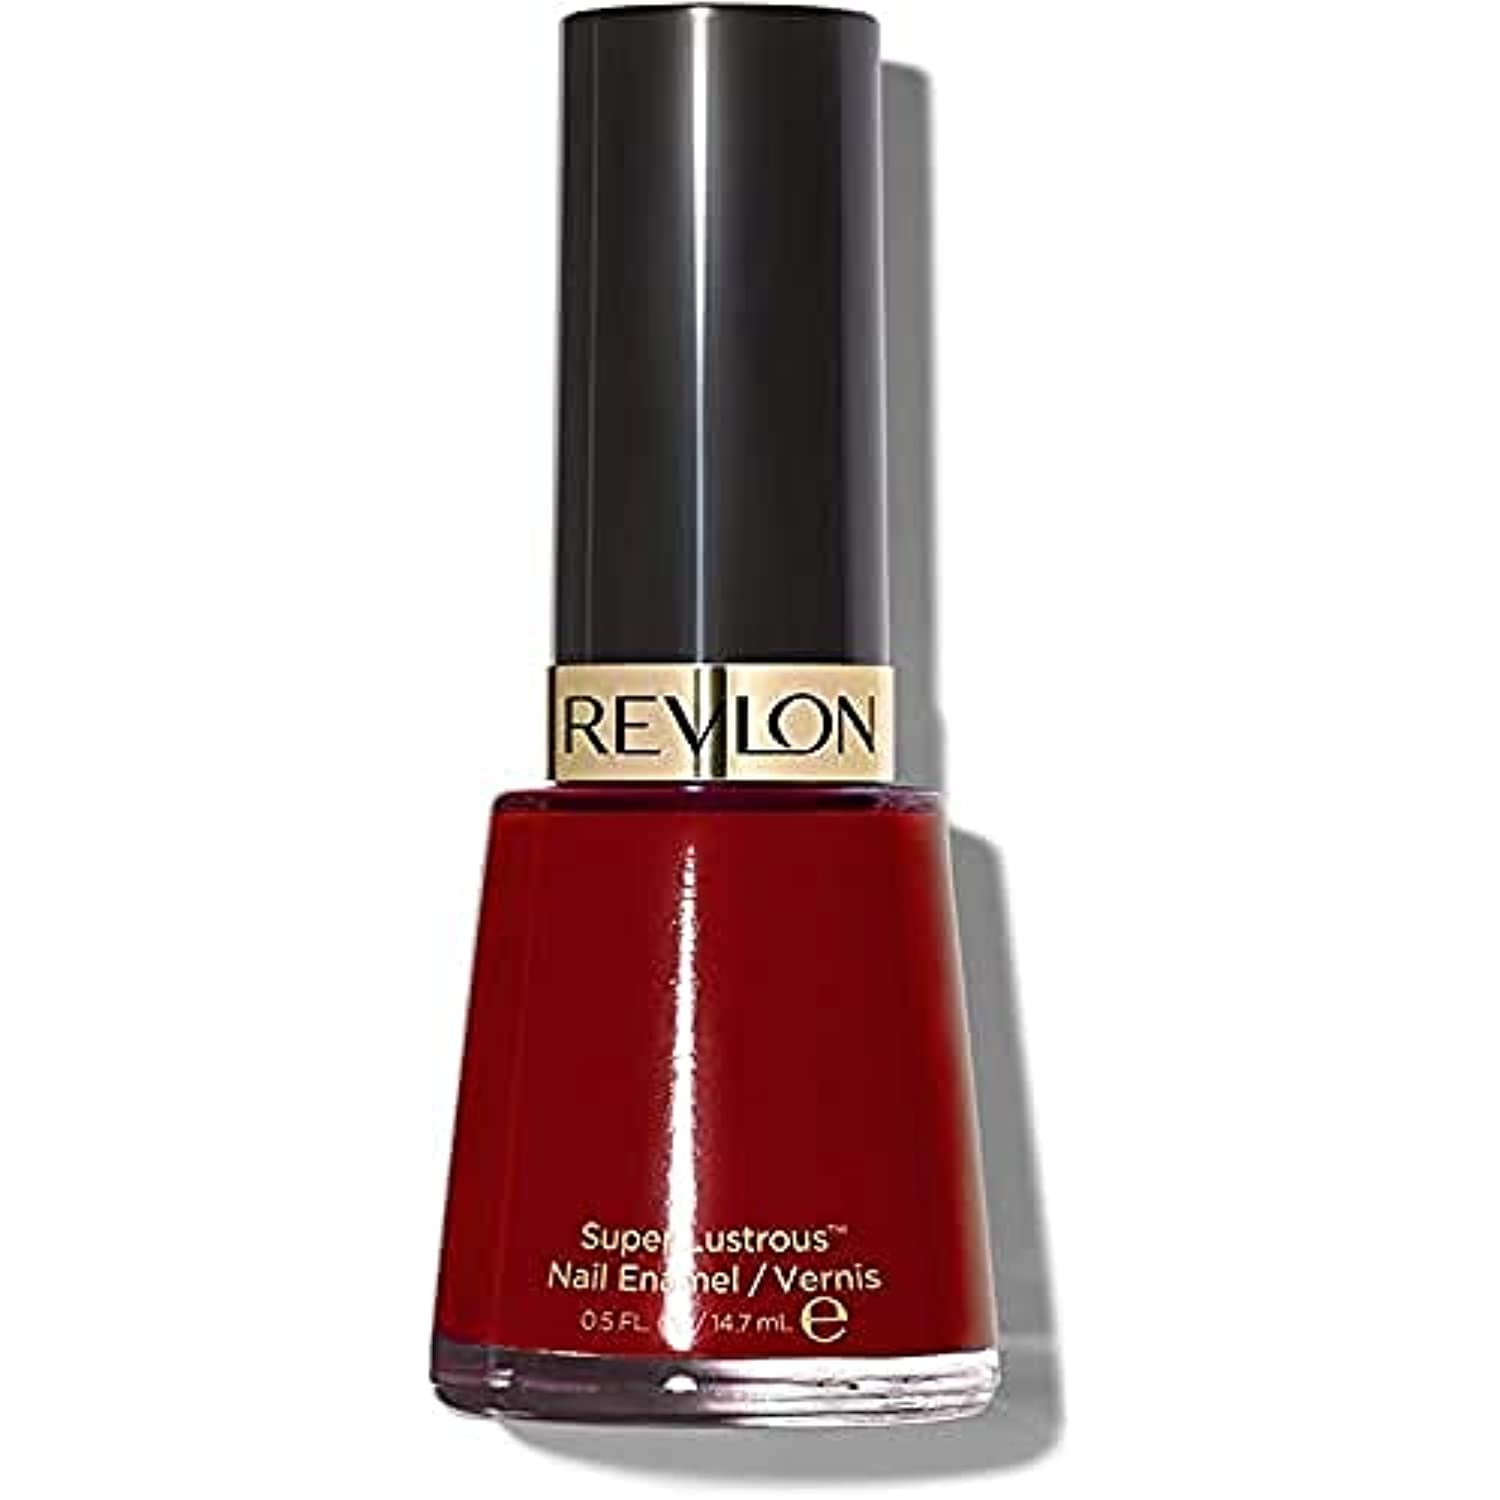 Revlon Nail Enamel, Chip Resistant Nail Polish, Glossy Shine Finish, In Red/Coral,  730 Valentine Red,  Oz 